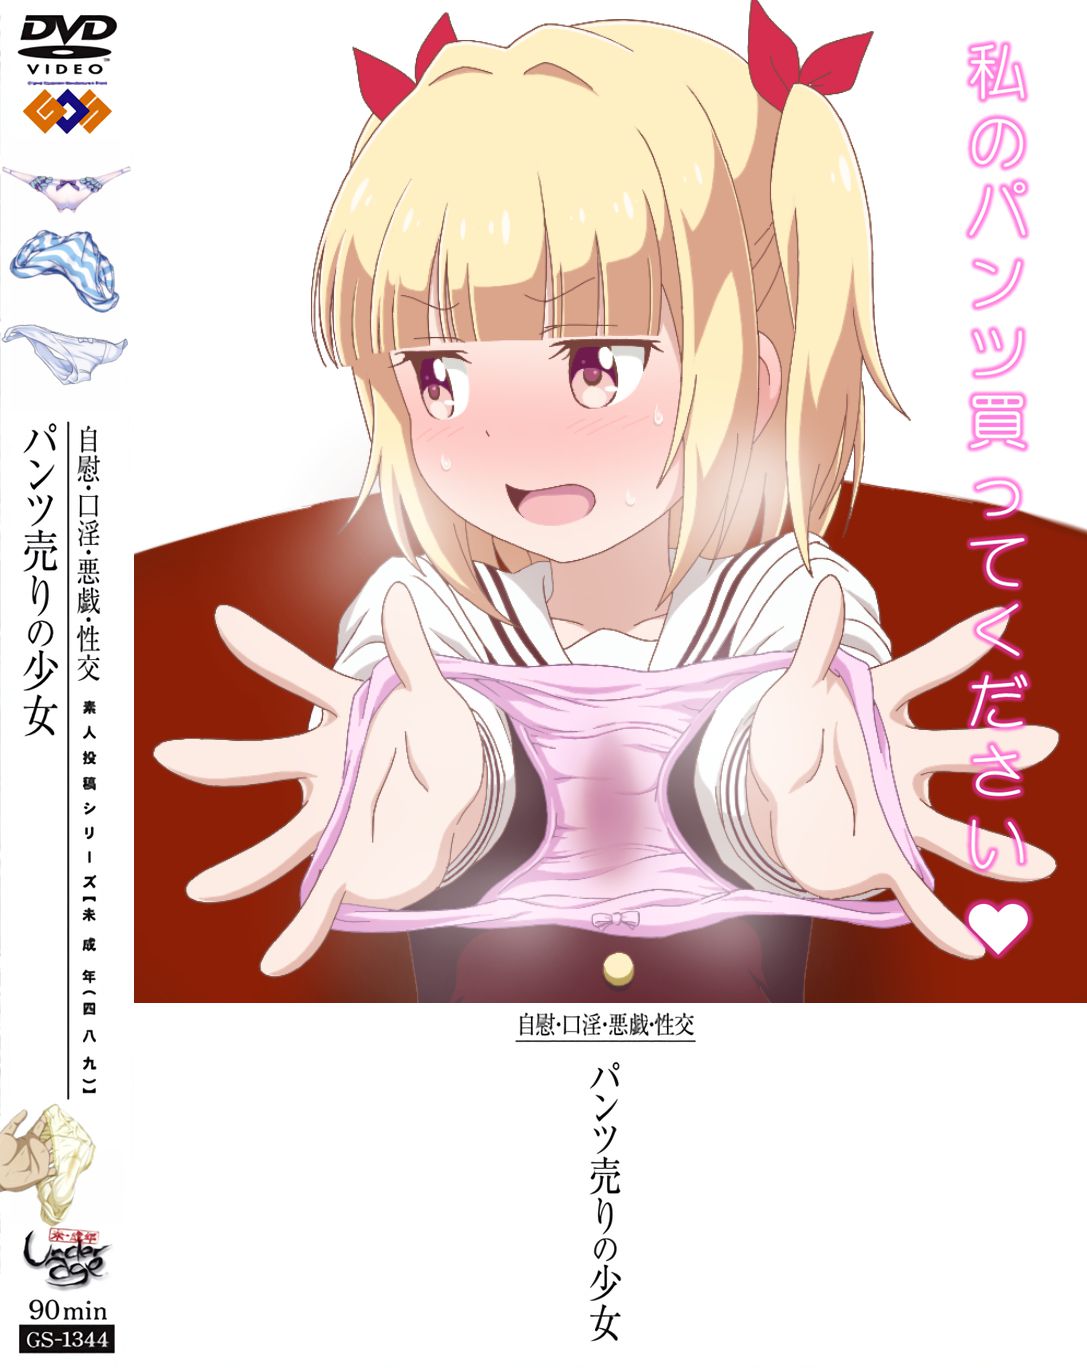 [AV Pakekora] Anime character that has been on the cover of the magazine and AV package 36 42